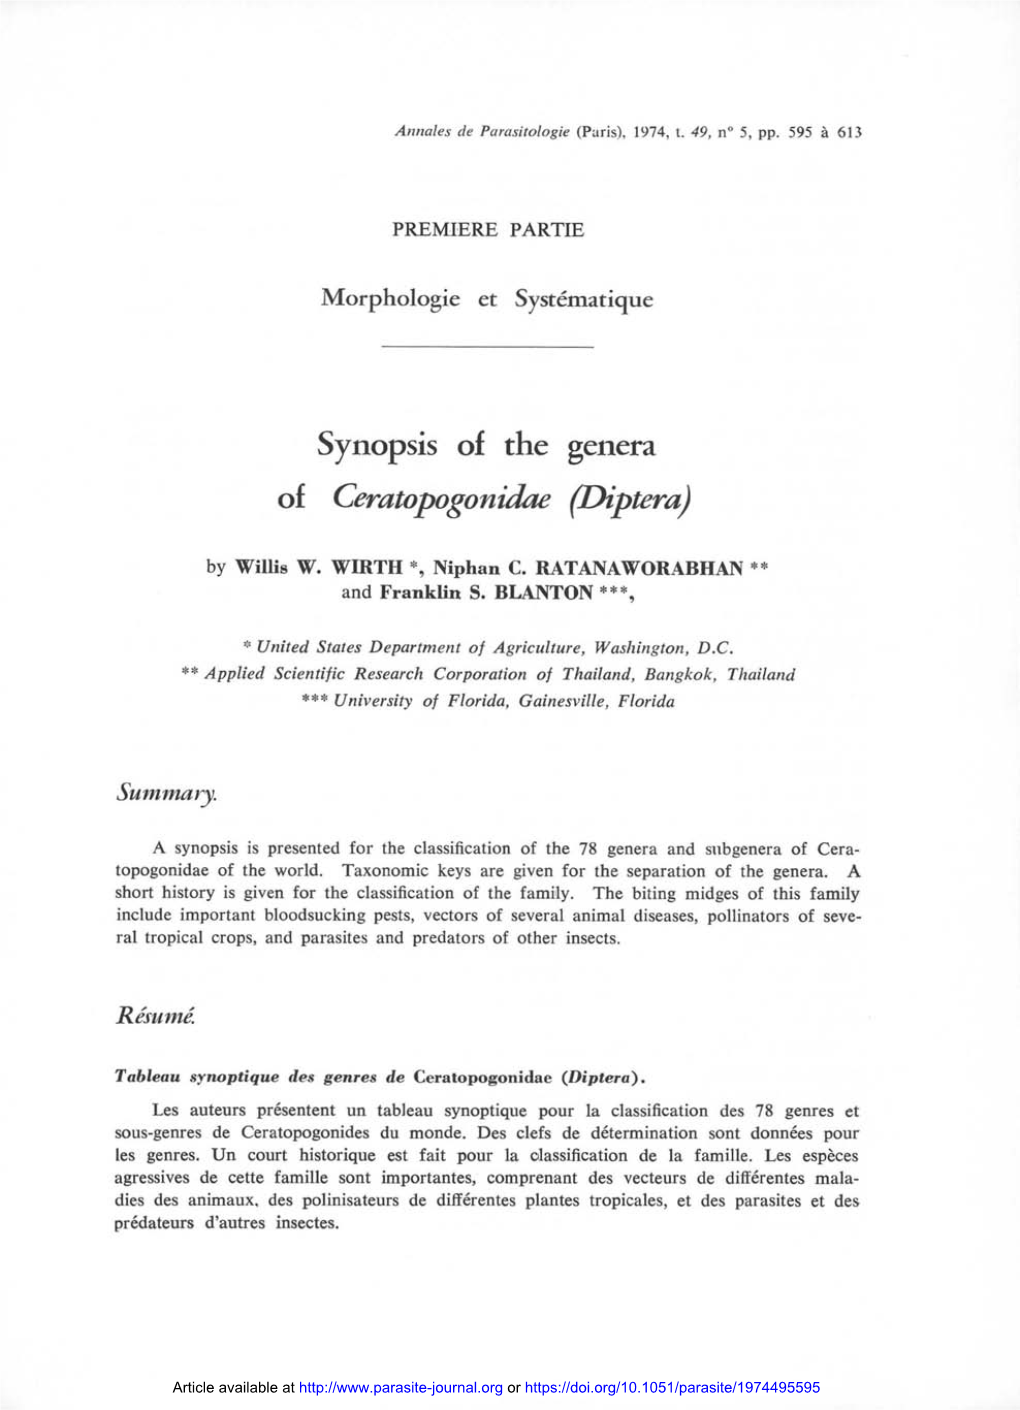 Synopsis of the Genera of Ceratopogonidae (Diptera)